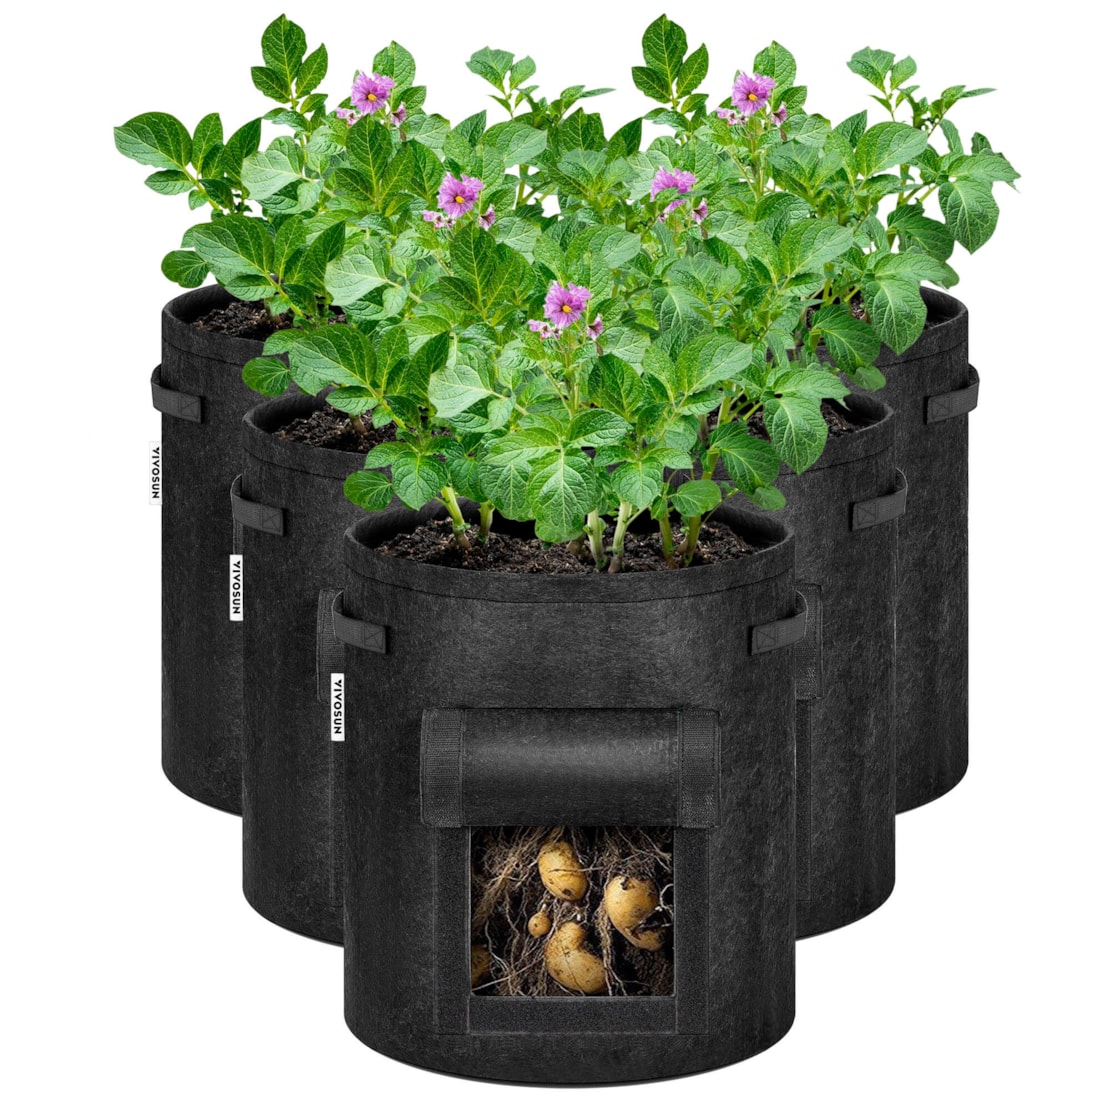 VIVOSUN 5-Pack 7 Gallon Potato Grow Bags, Fabric Pots with Handle and Roll-up Window, Black